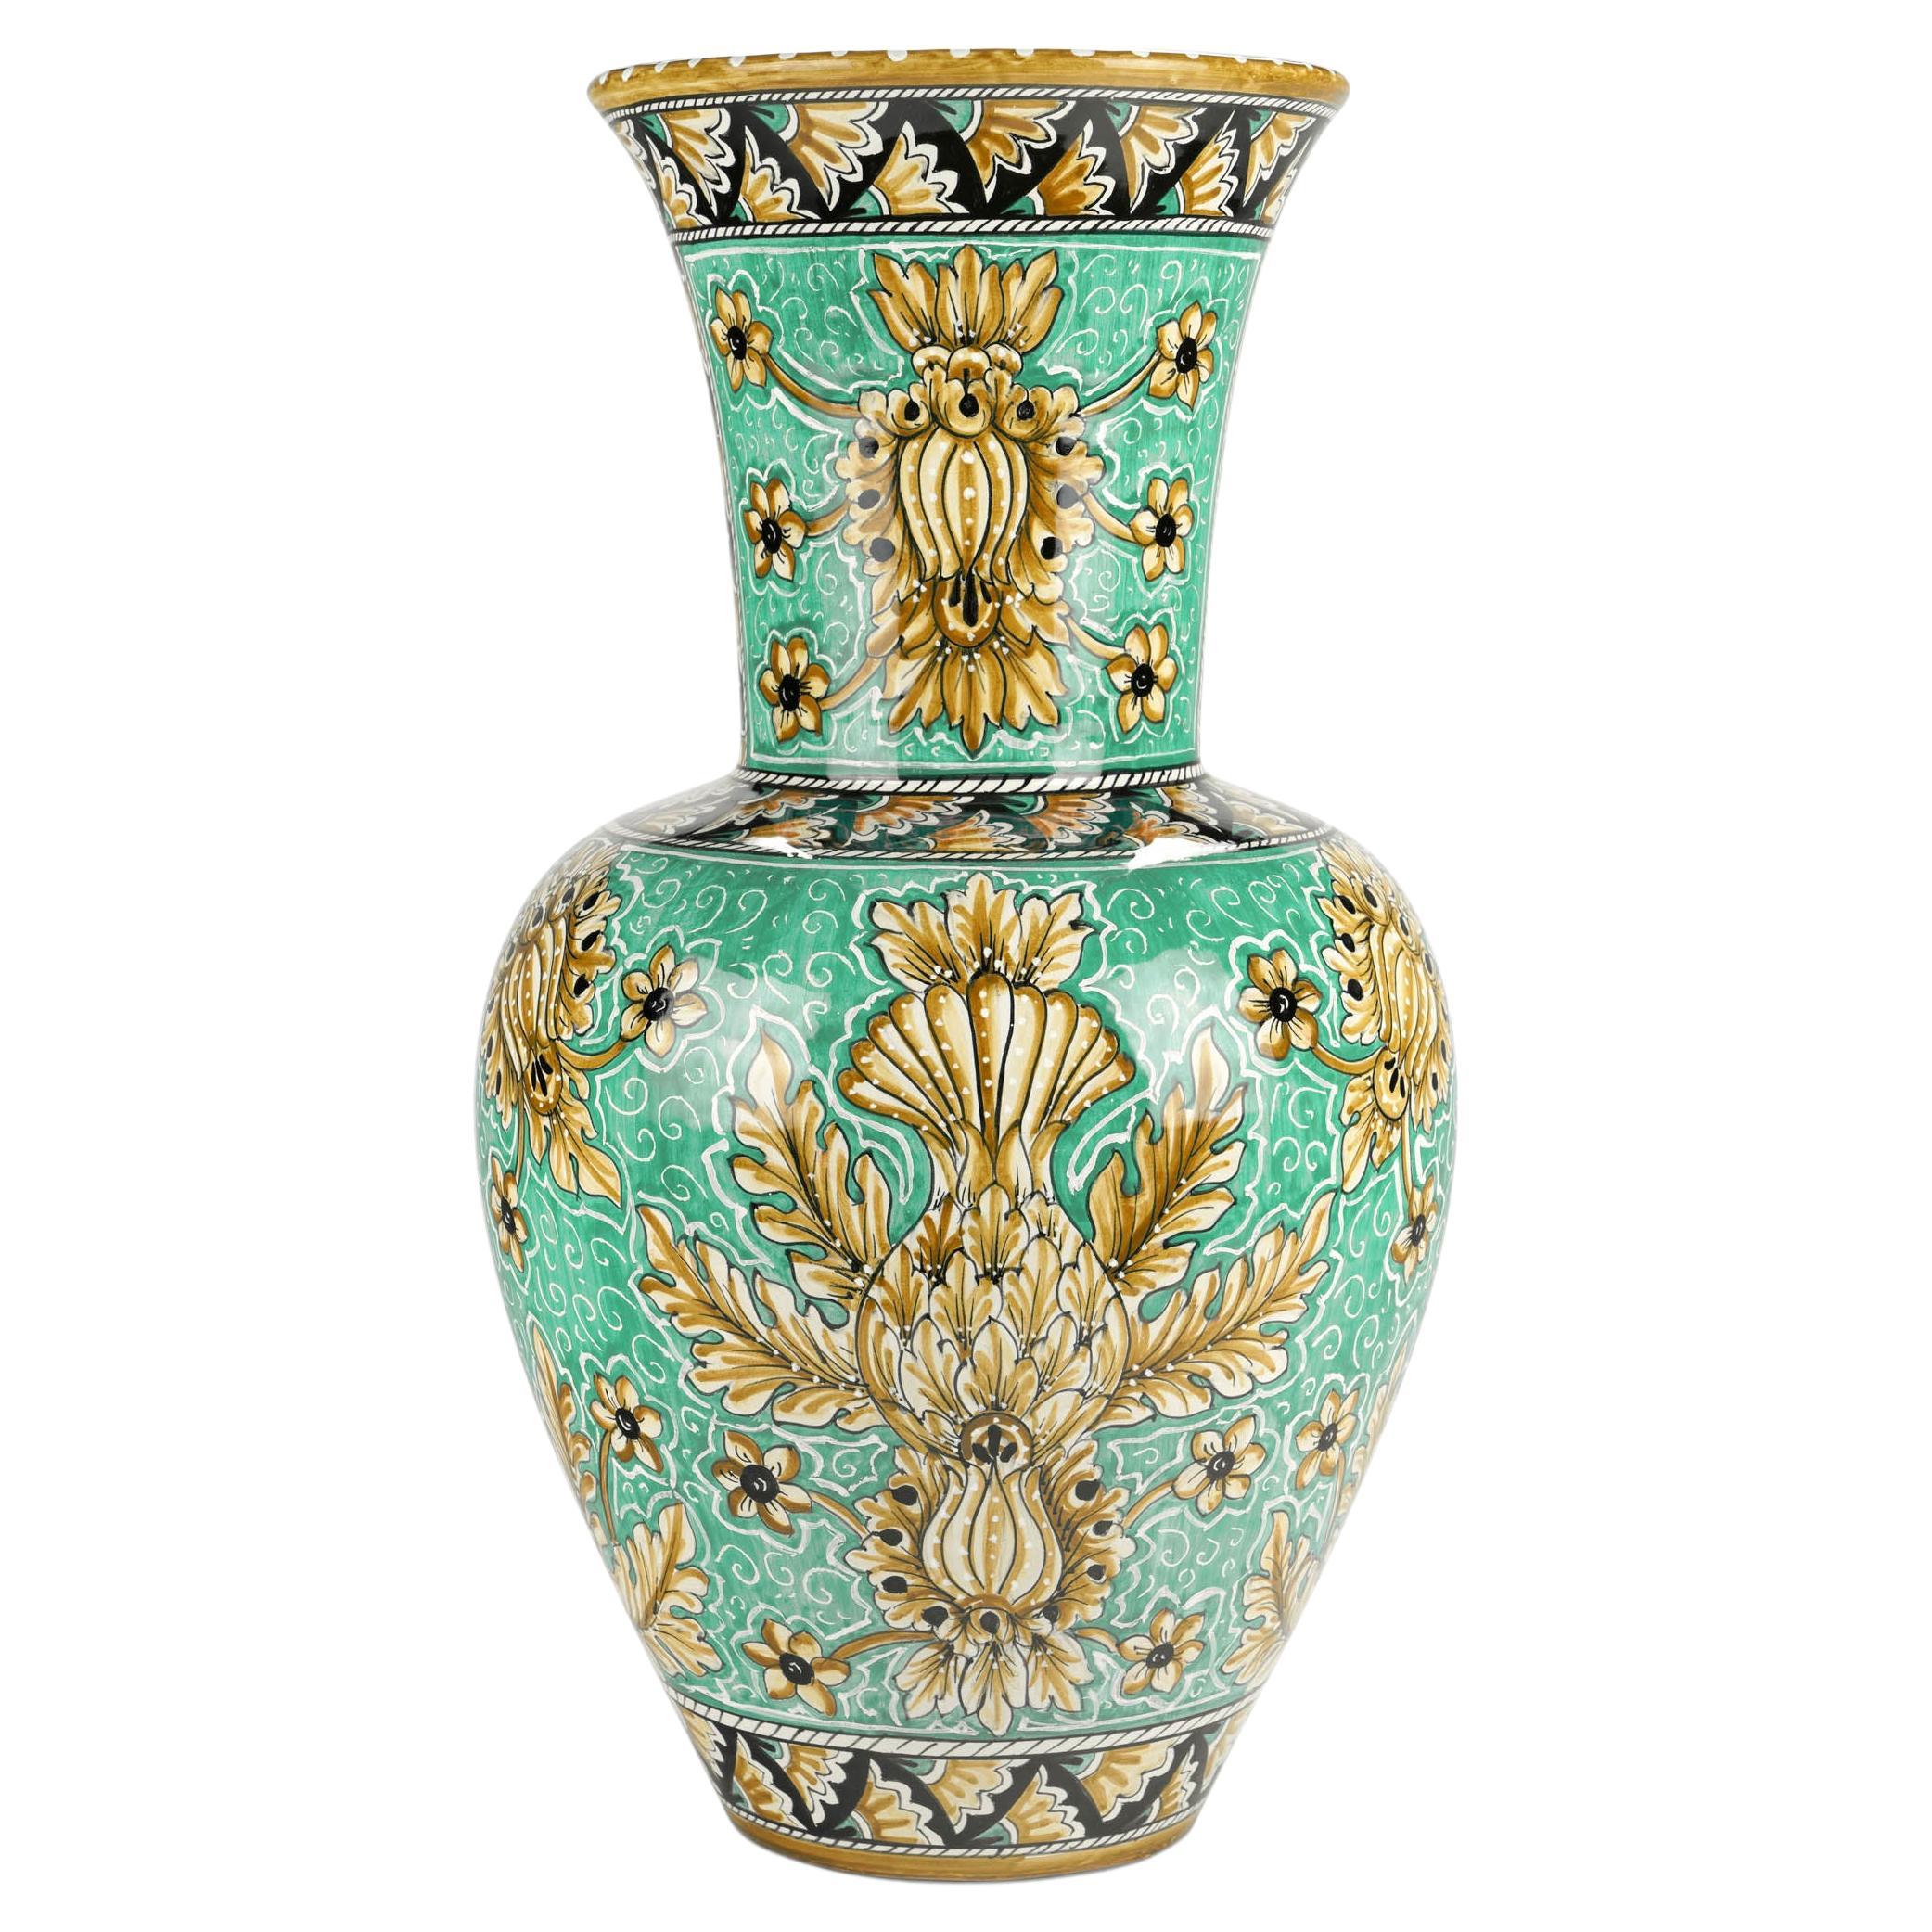 Vase Vessel Majolica Ornament Hand Painted Aquamarine Limited Edition Ceramic